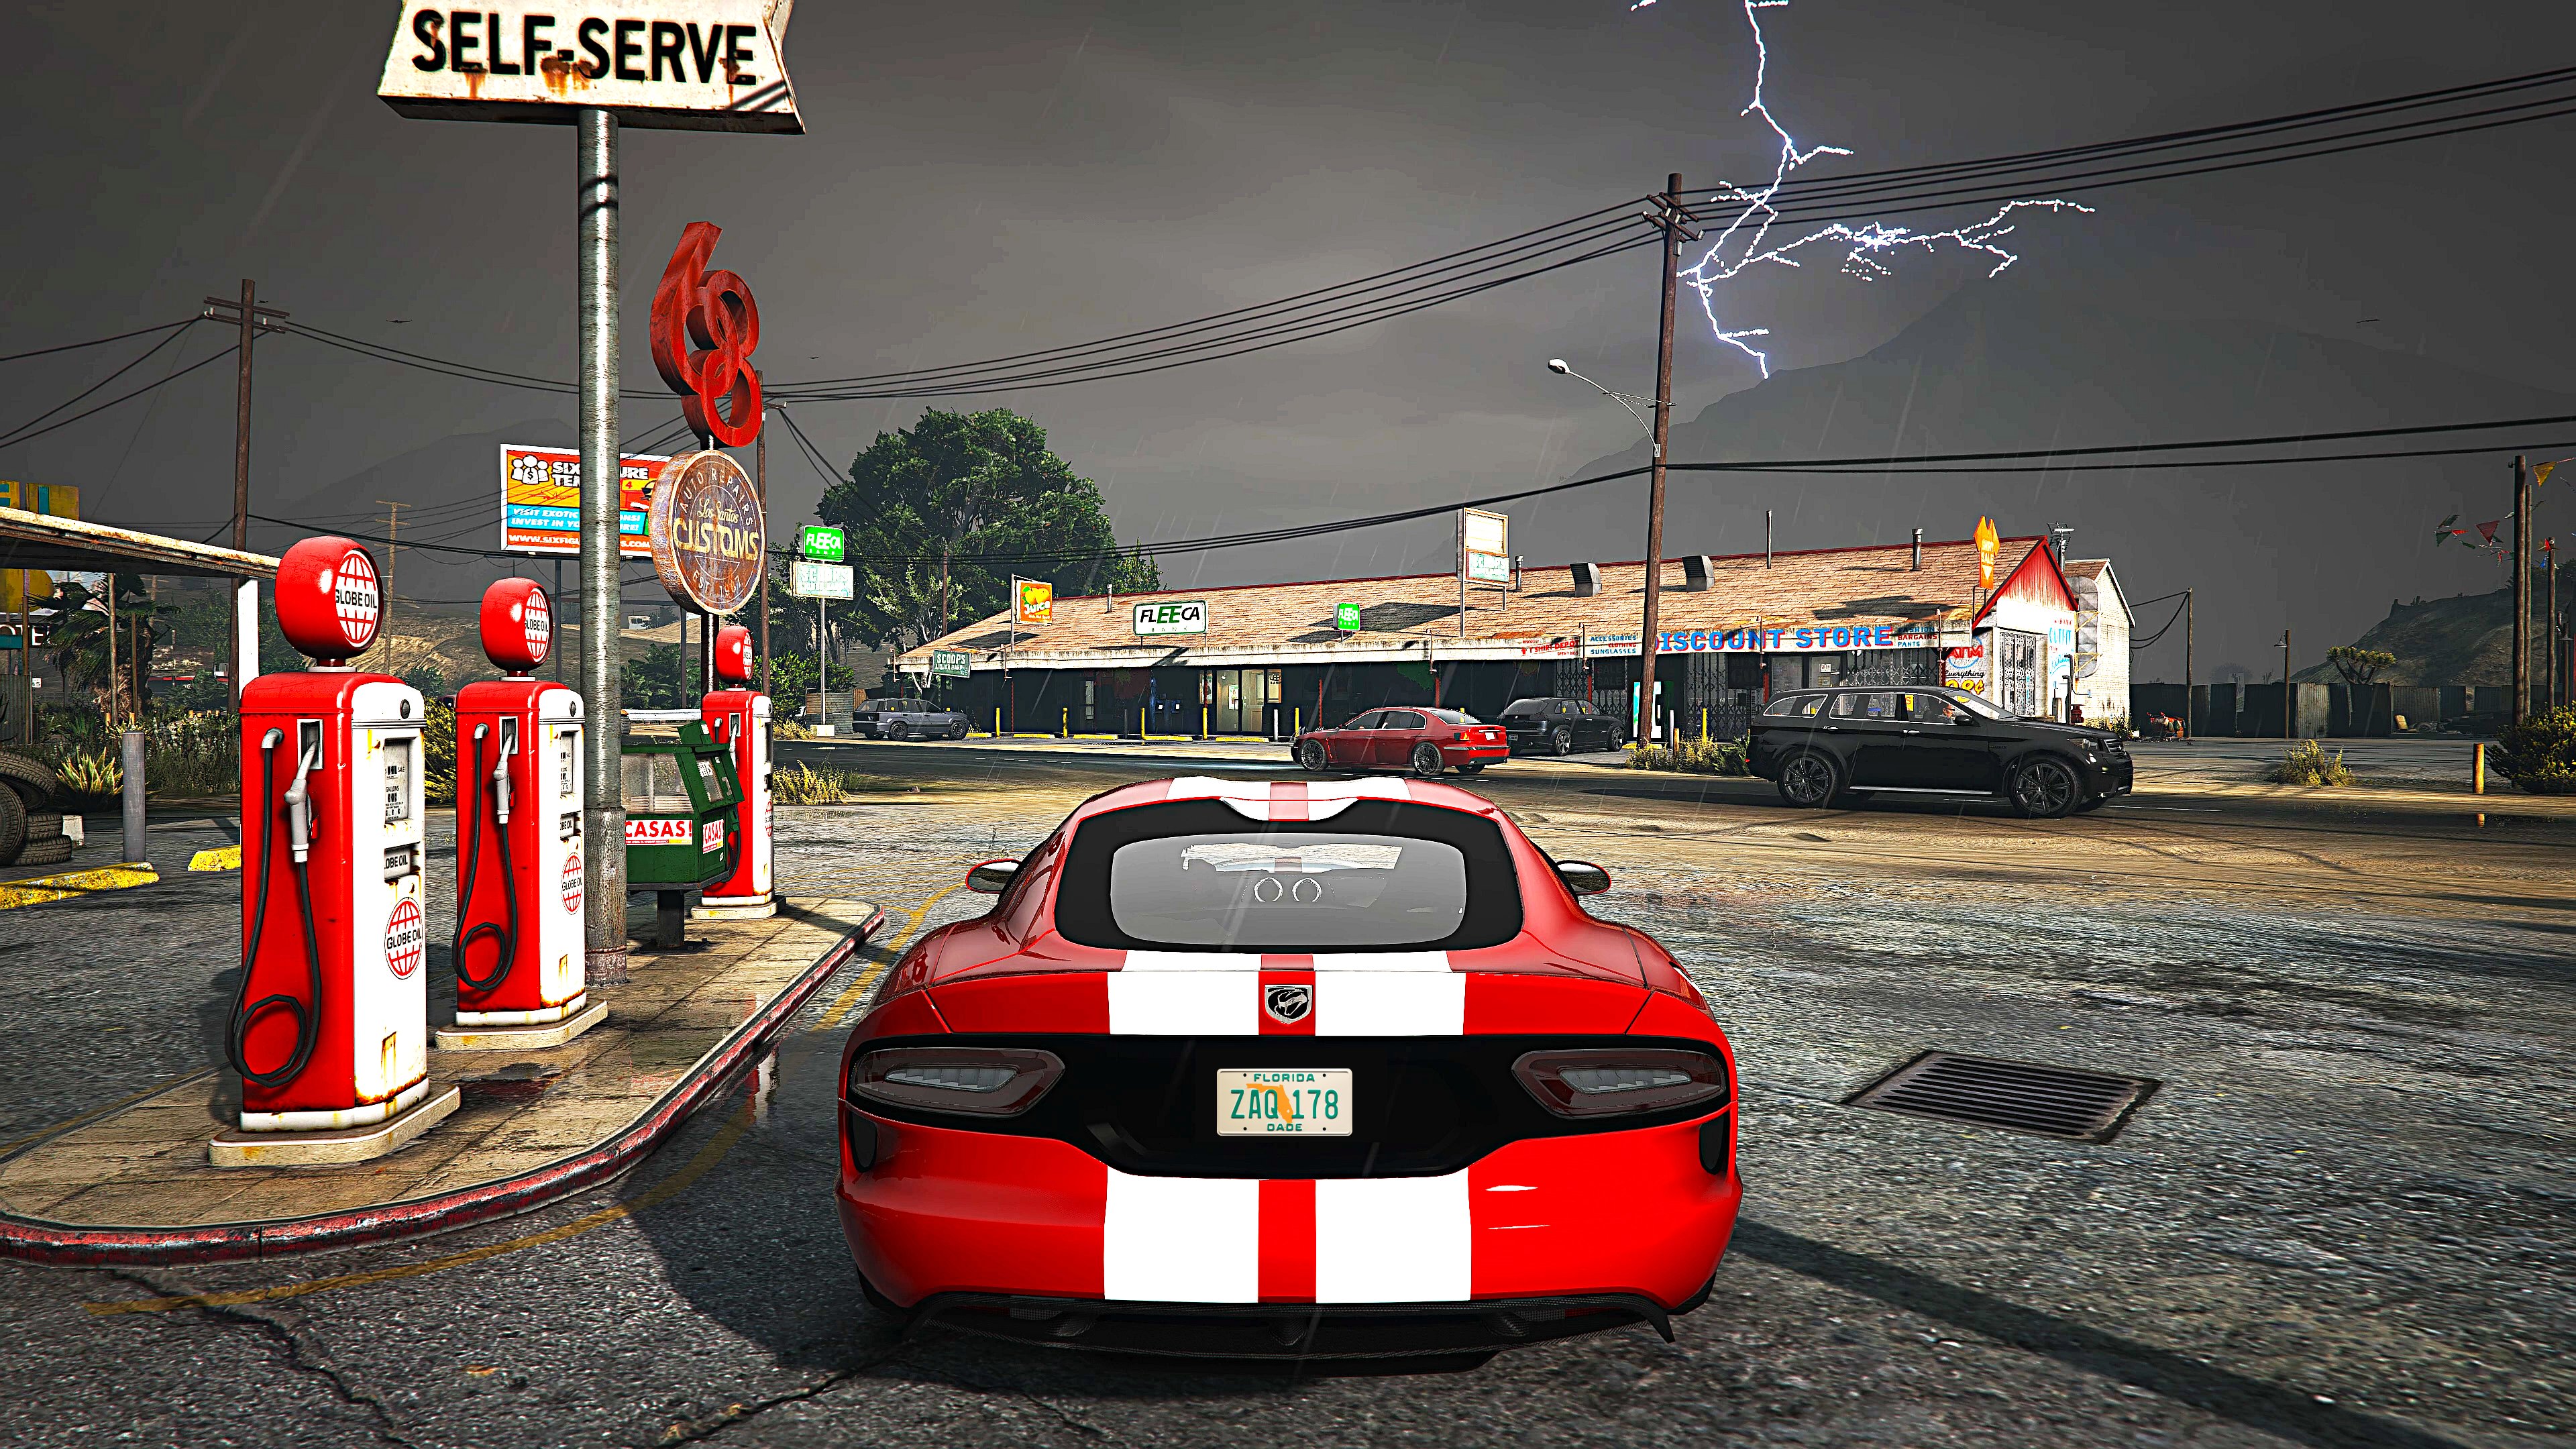 DubstepZz on X: Grand Theft Auto 6 Graphics! NEW 2021 RTX Ray Tracing GTA  6 Graphics Mod! [GTA 5 PC Gameplay]    / X